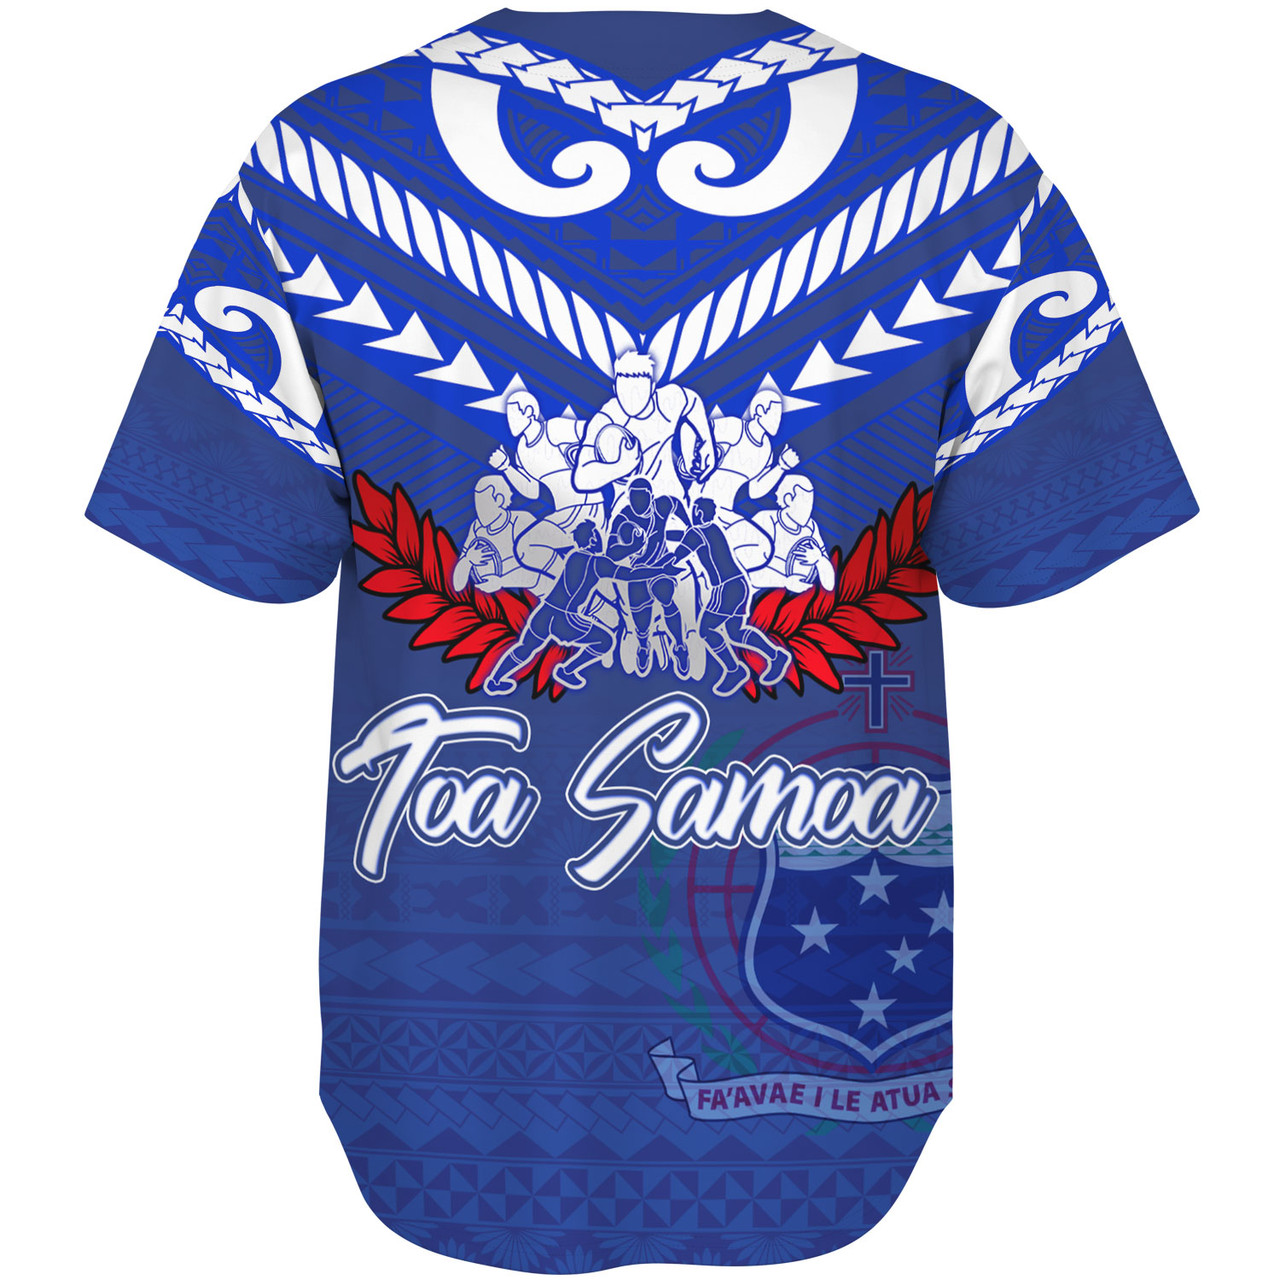 Samoa Custom Personalised Baseball Shirt Toa Samoa Tribal Pattern